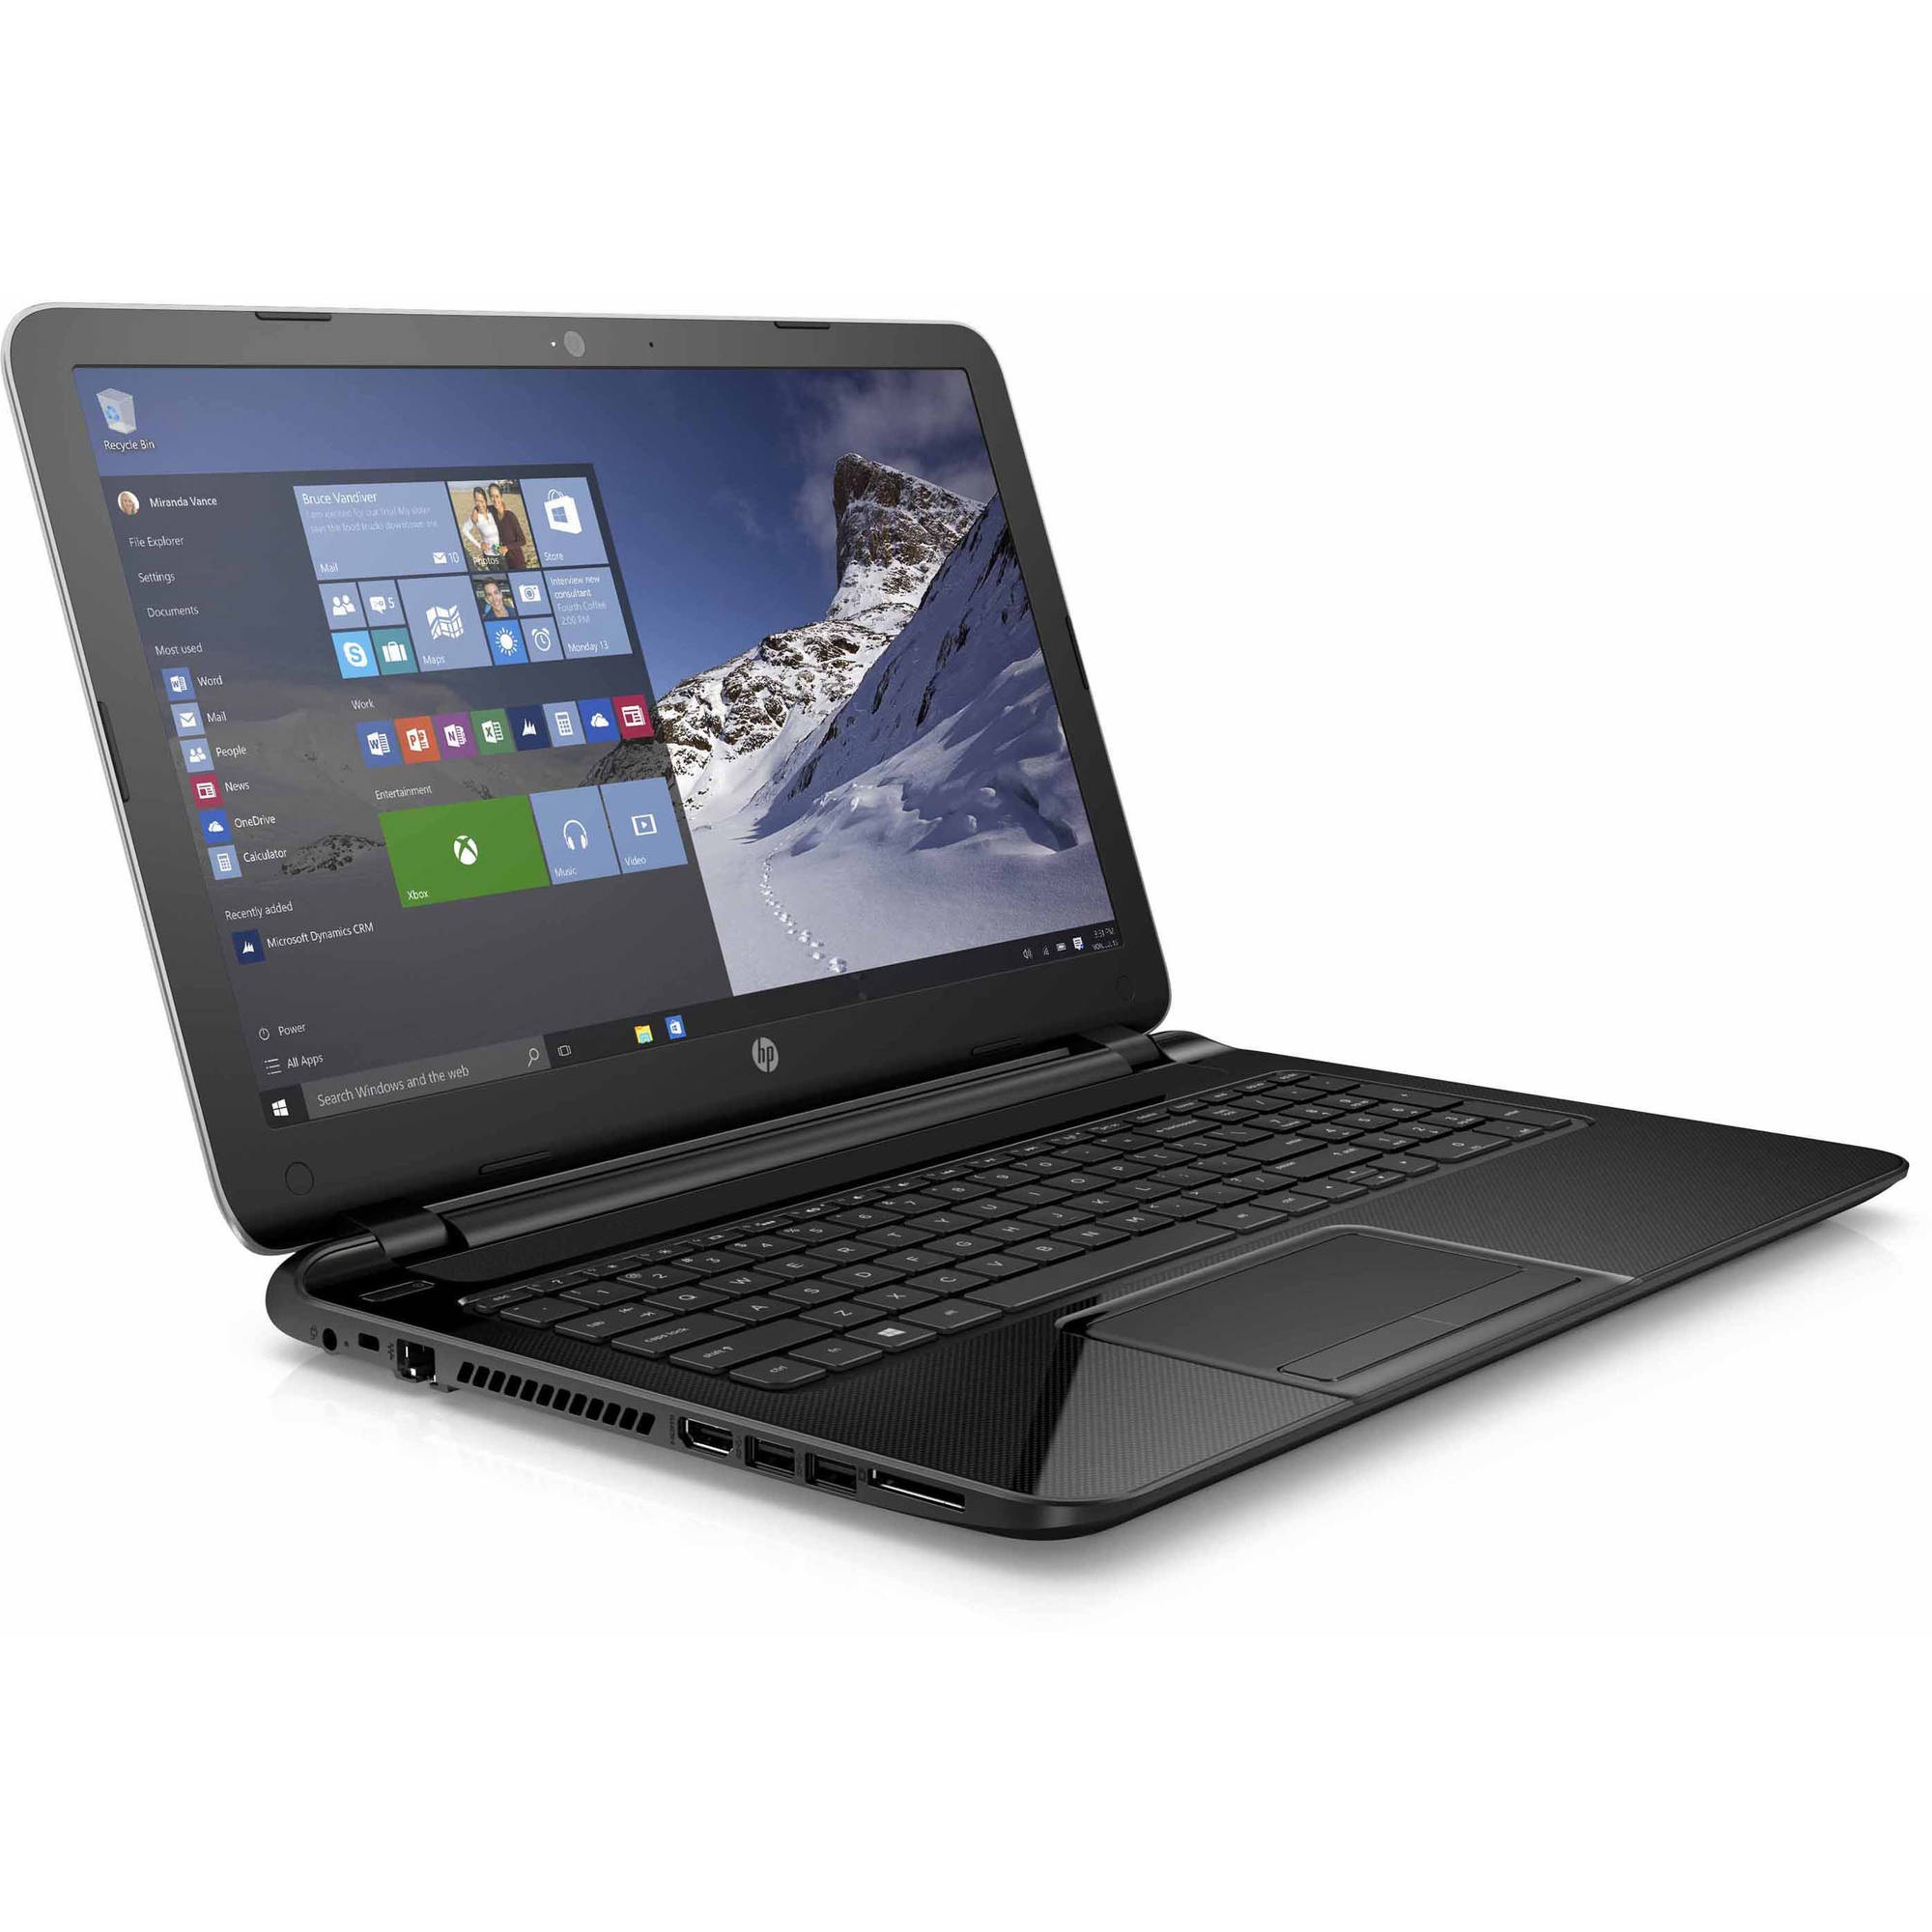 Laptop Hp 15 F233wm 156 Intel Celeron N3050 Sklep Prolinepl 9500